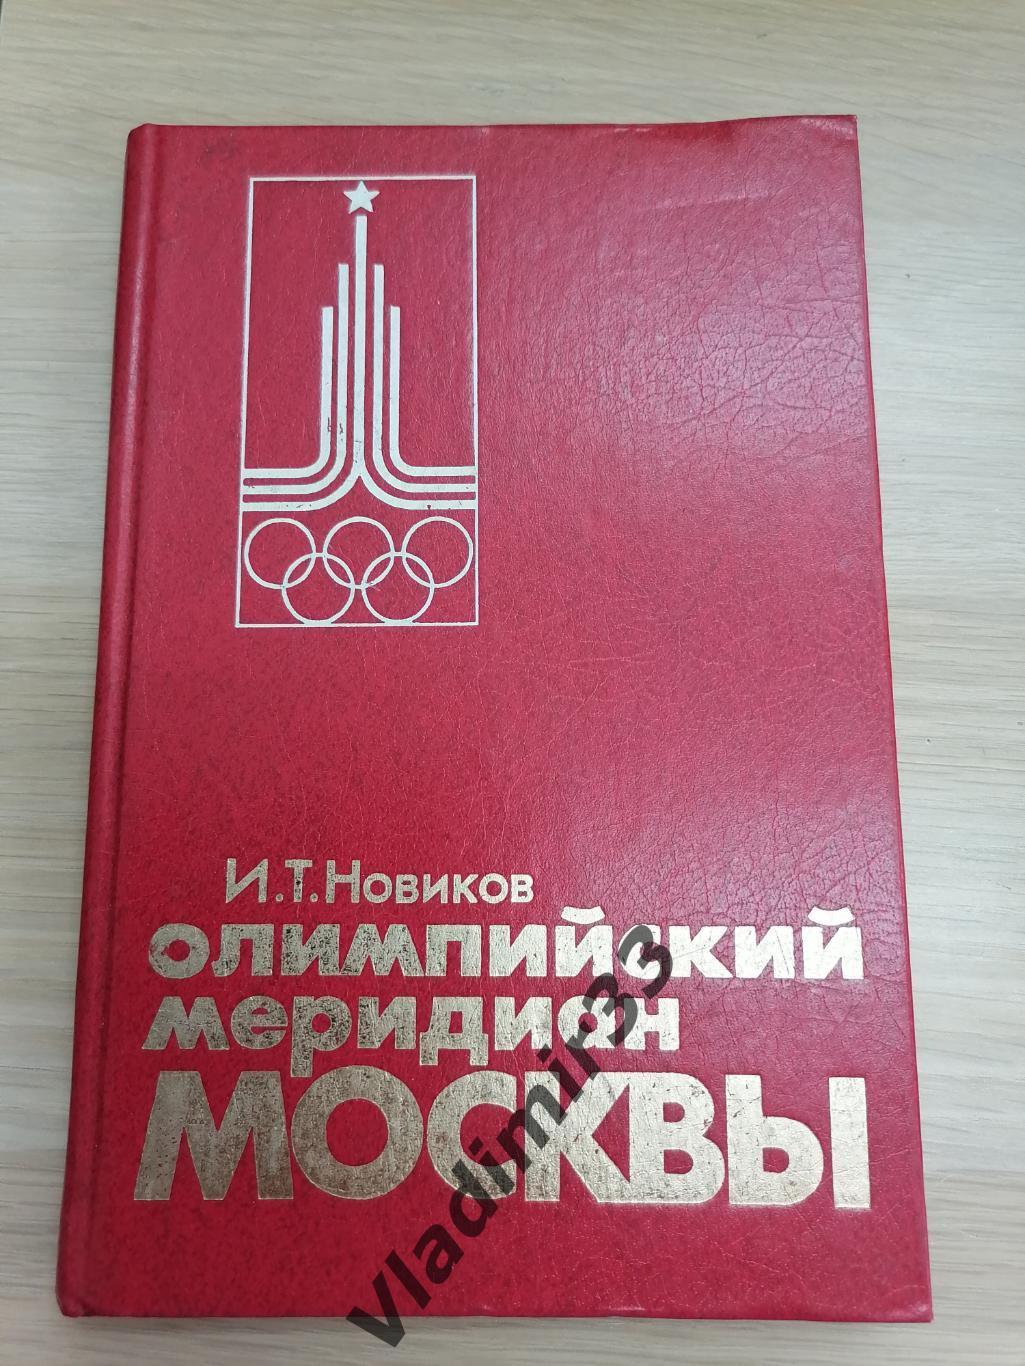 Олимпийский меридиан Москвы 1983 год